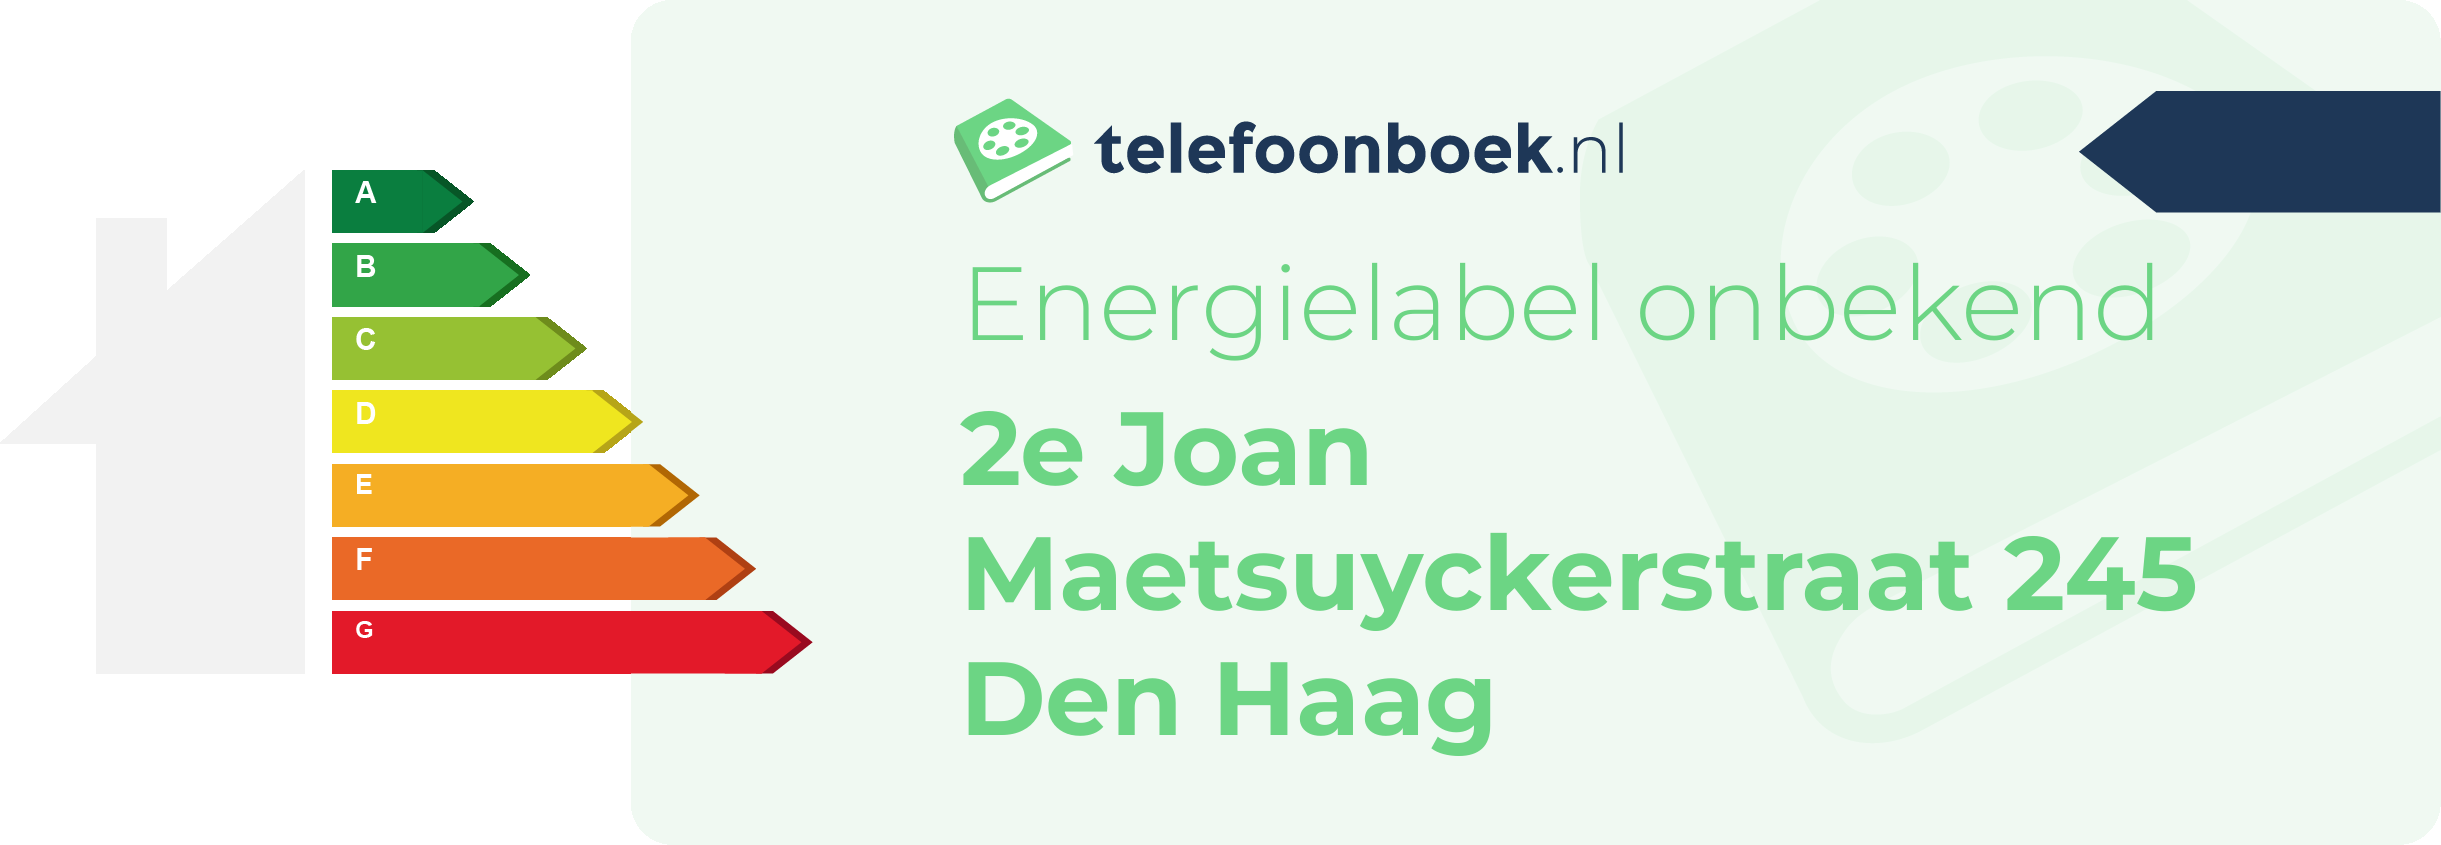 Energielabel 2e Joan Maetsuyckerstraat 245 Den Haag